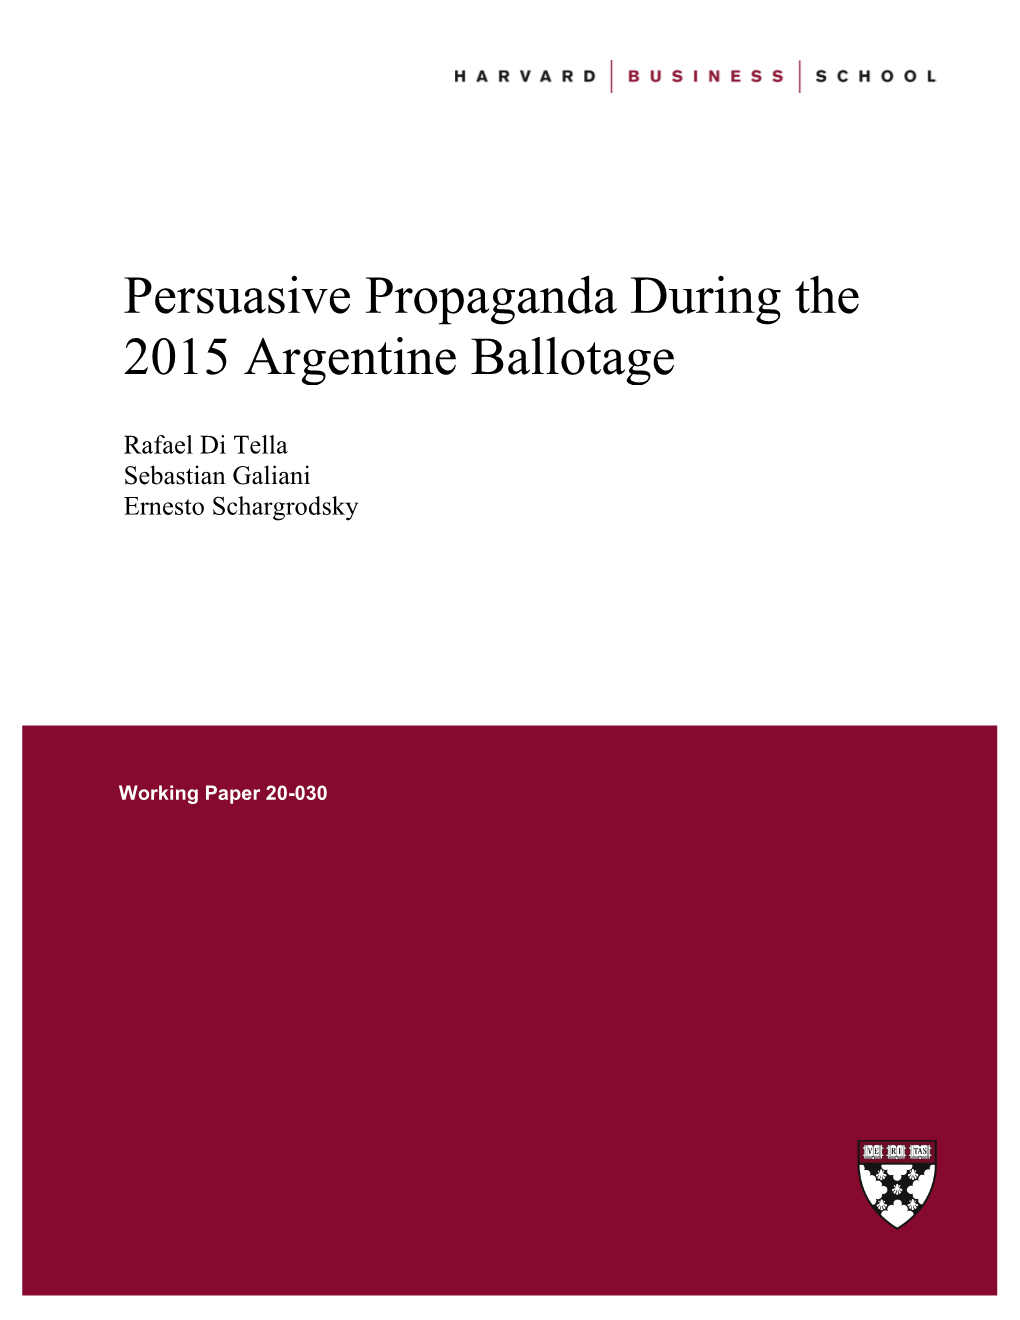 "Persuasive Propaganda During the 2015 Argentine Ballotage." (Pdf)